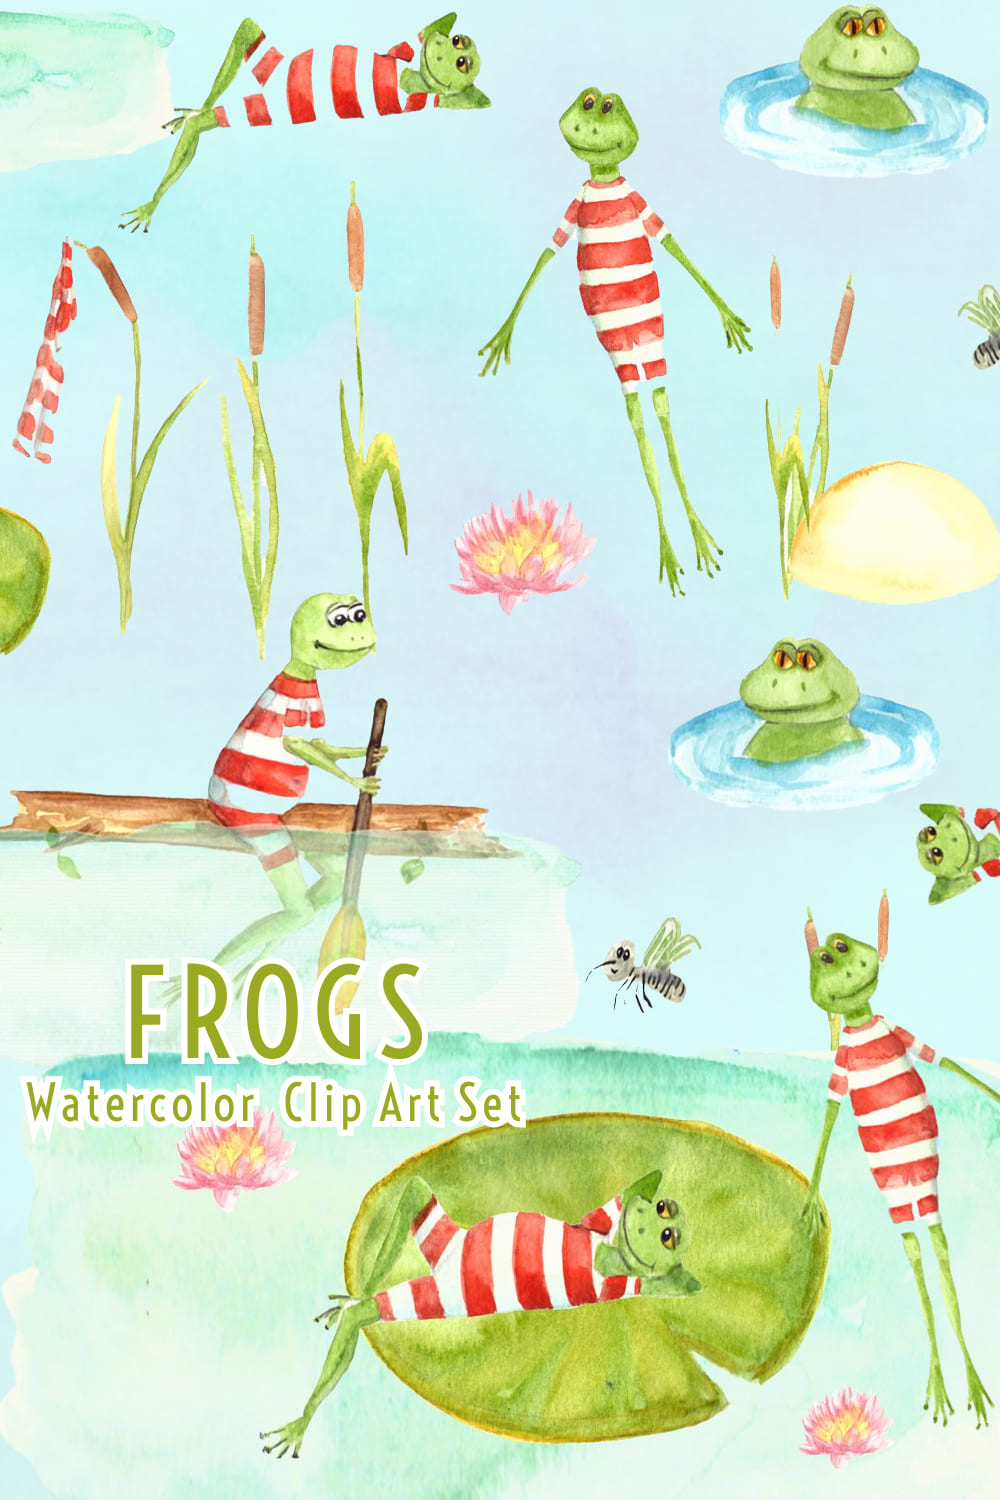 Watercolor Frogs Clip Art Set - Pinterest Image Preview.